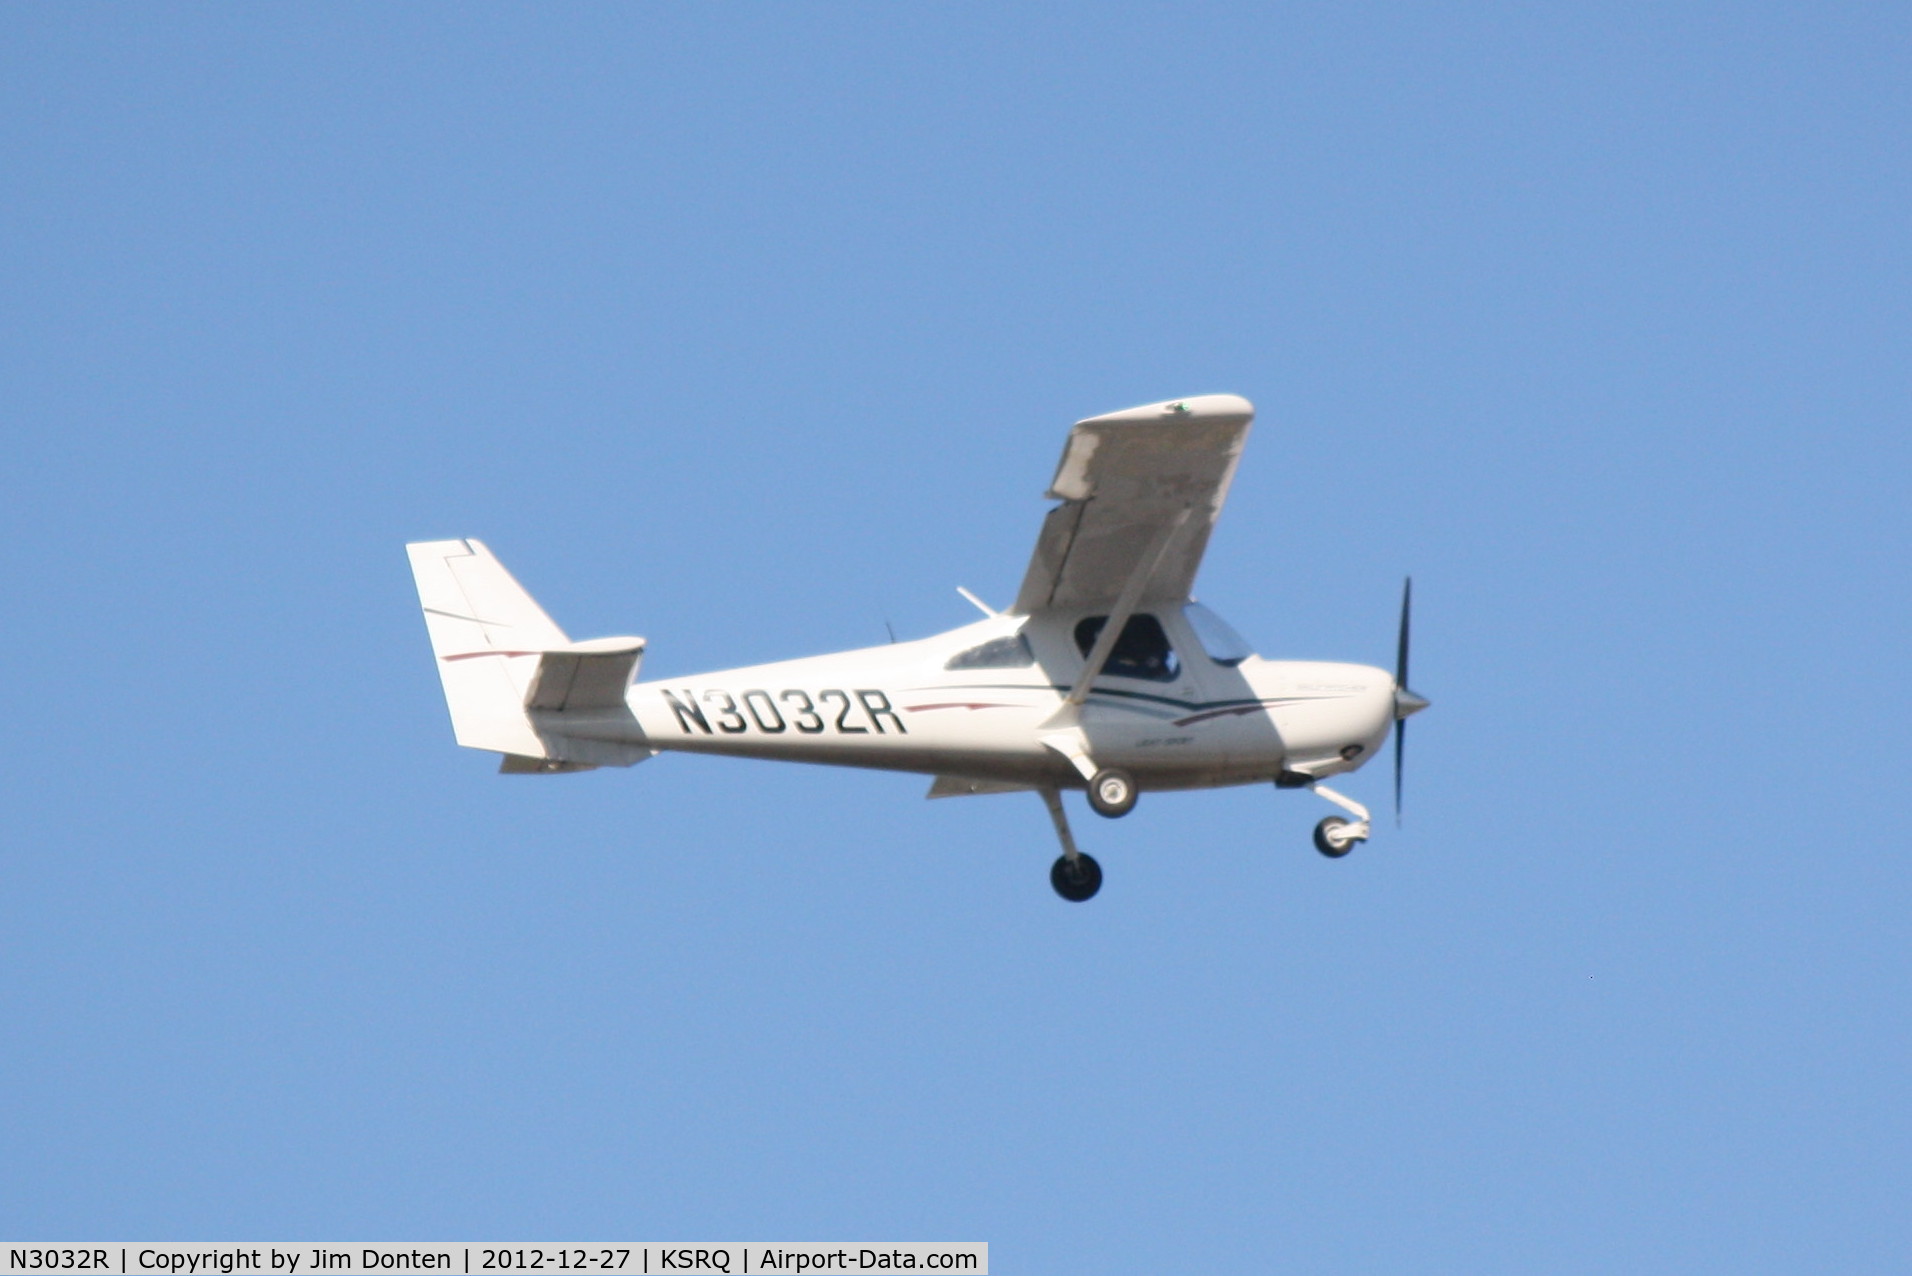 N3032R, Cessna 162 Skycatcher C/N 16200105, Cessna Skycatcher (N3032R) on approach to Runway 4 at Sarasota-Bradenton International Airport